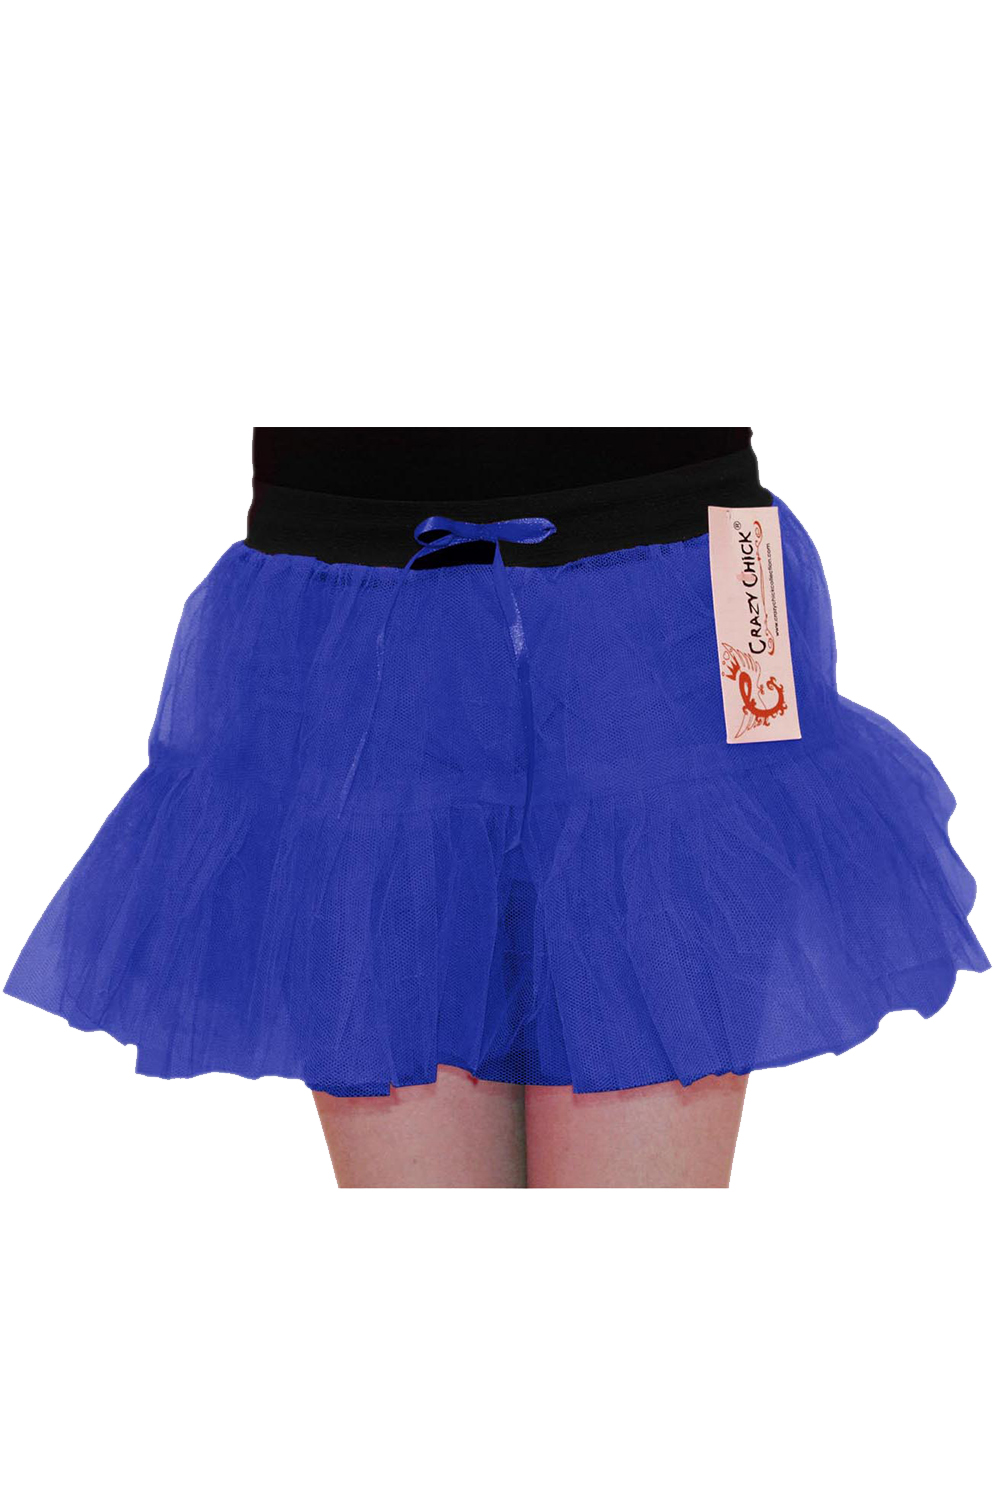 Crazy Chick Girls 2 Layers Blue Tutu Skirt